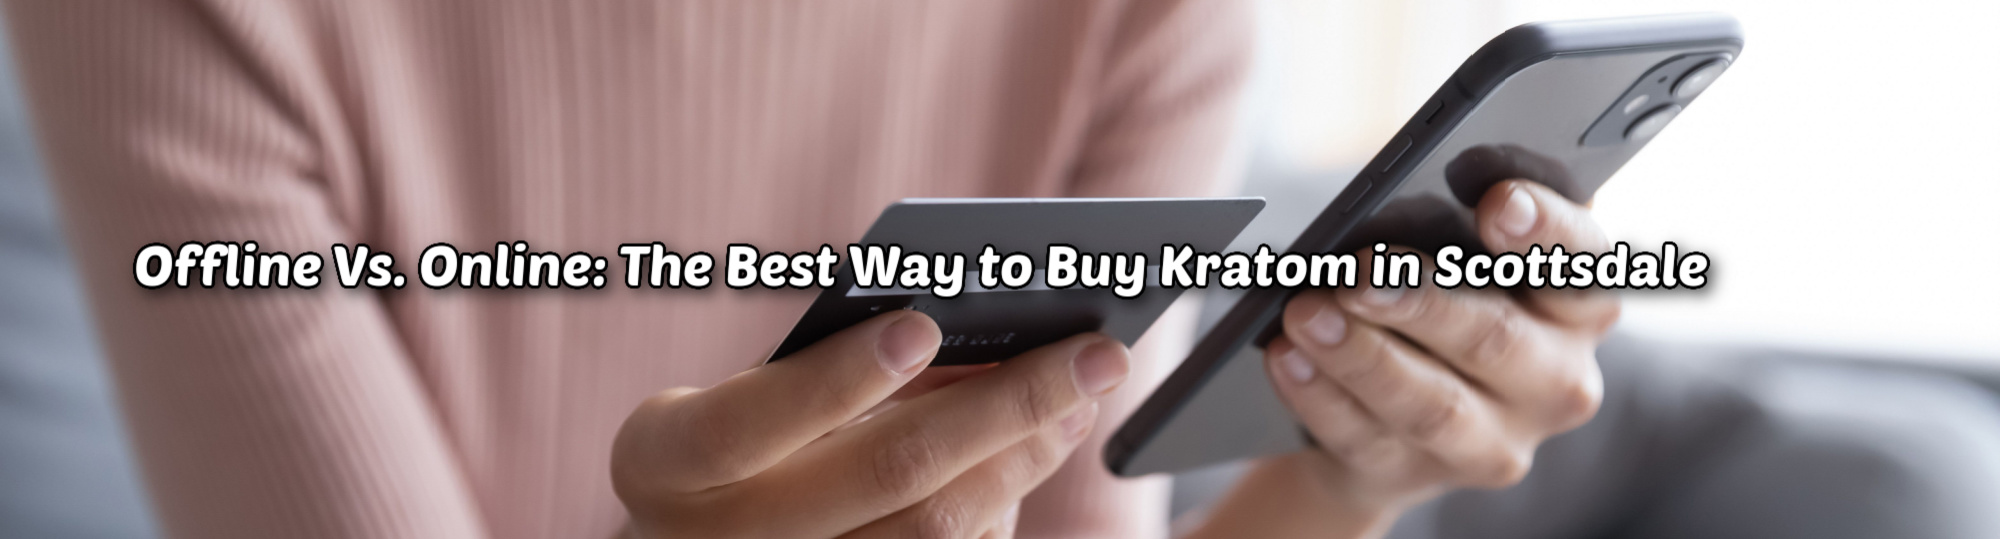 image of offline vs online best way to buy kratom in scottsdale